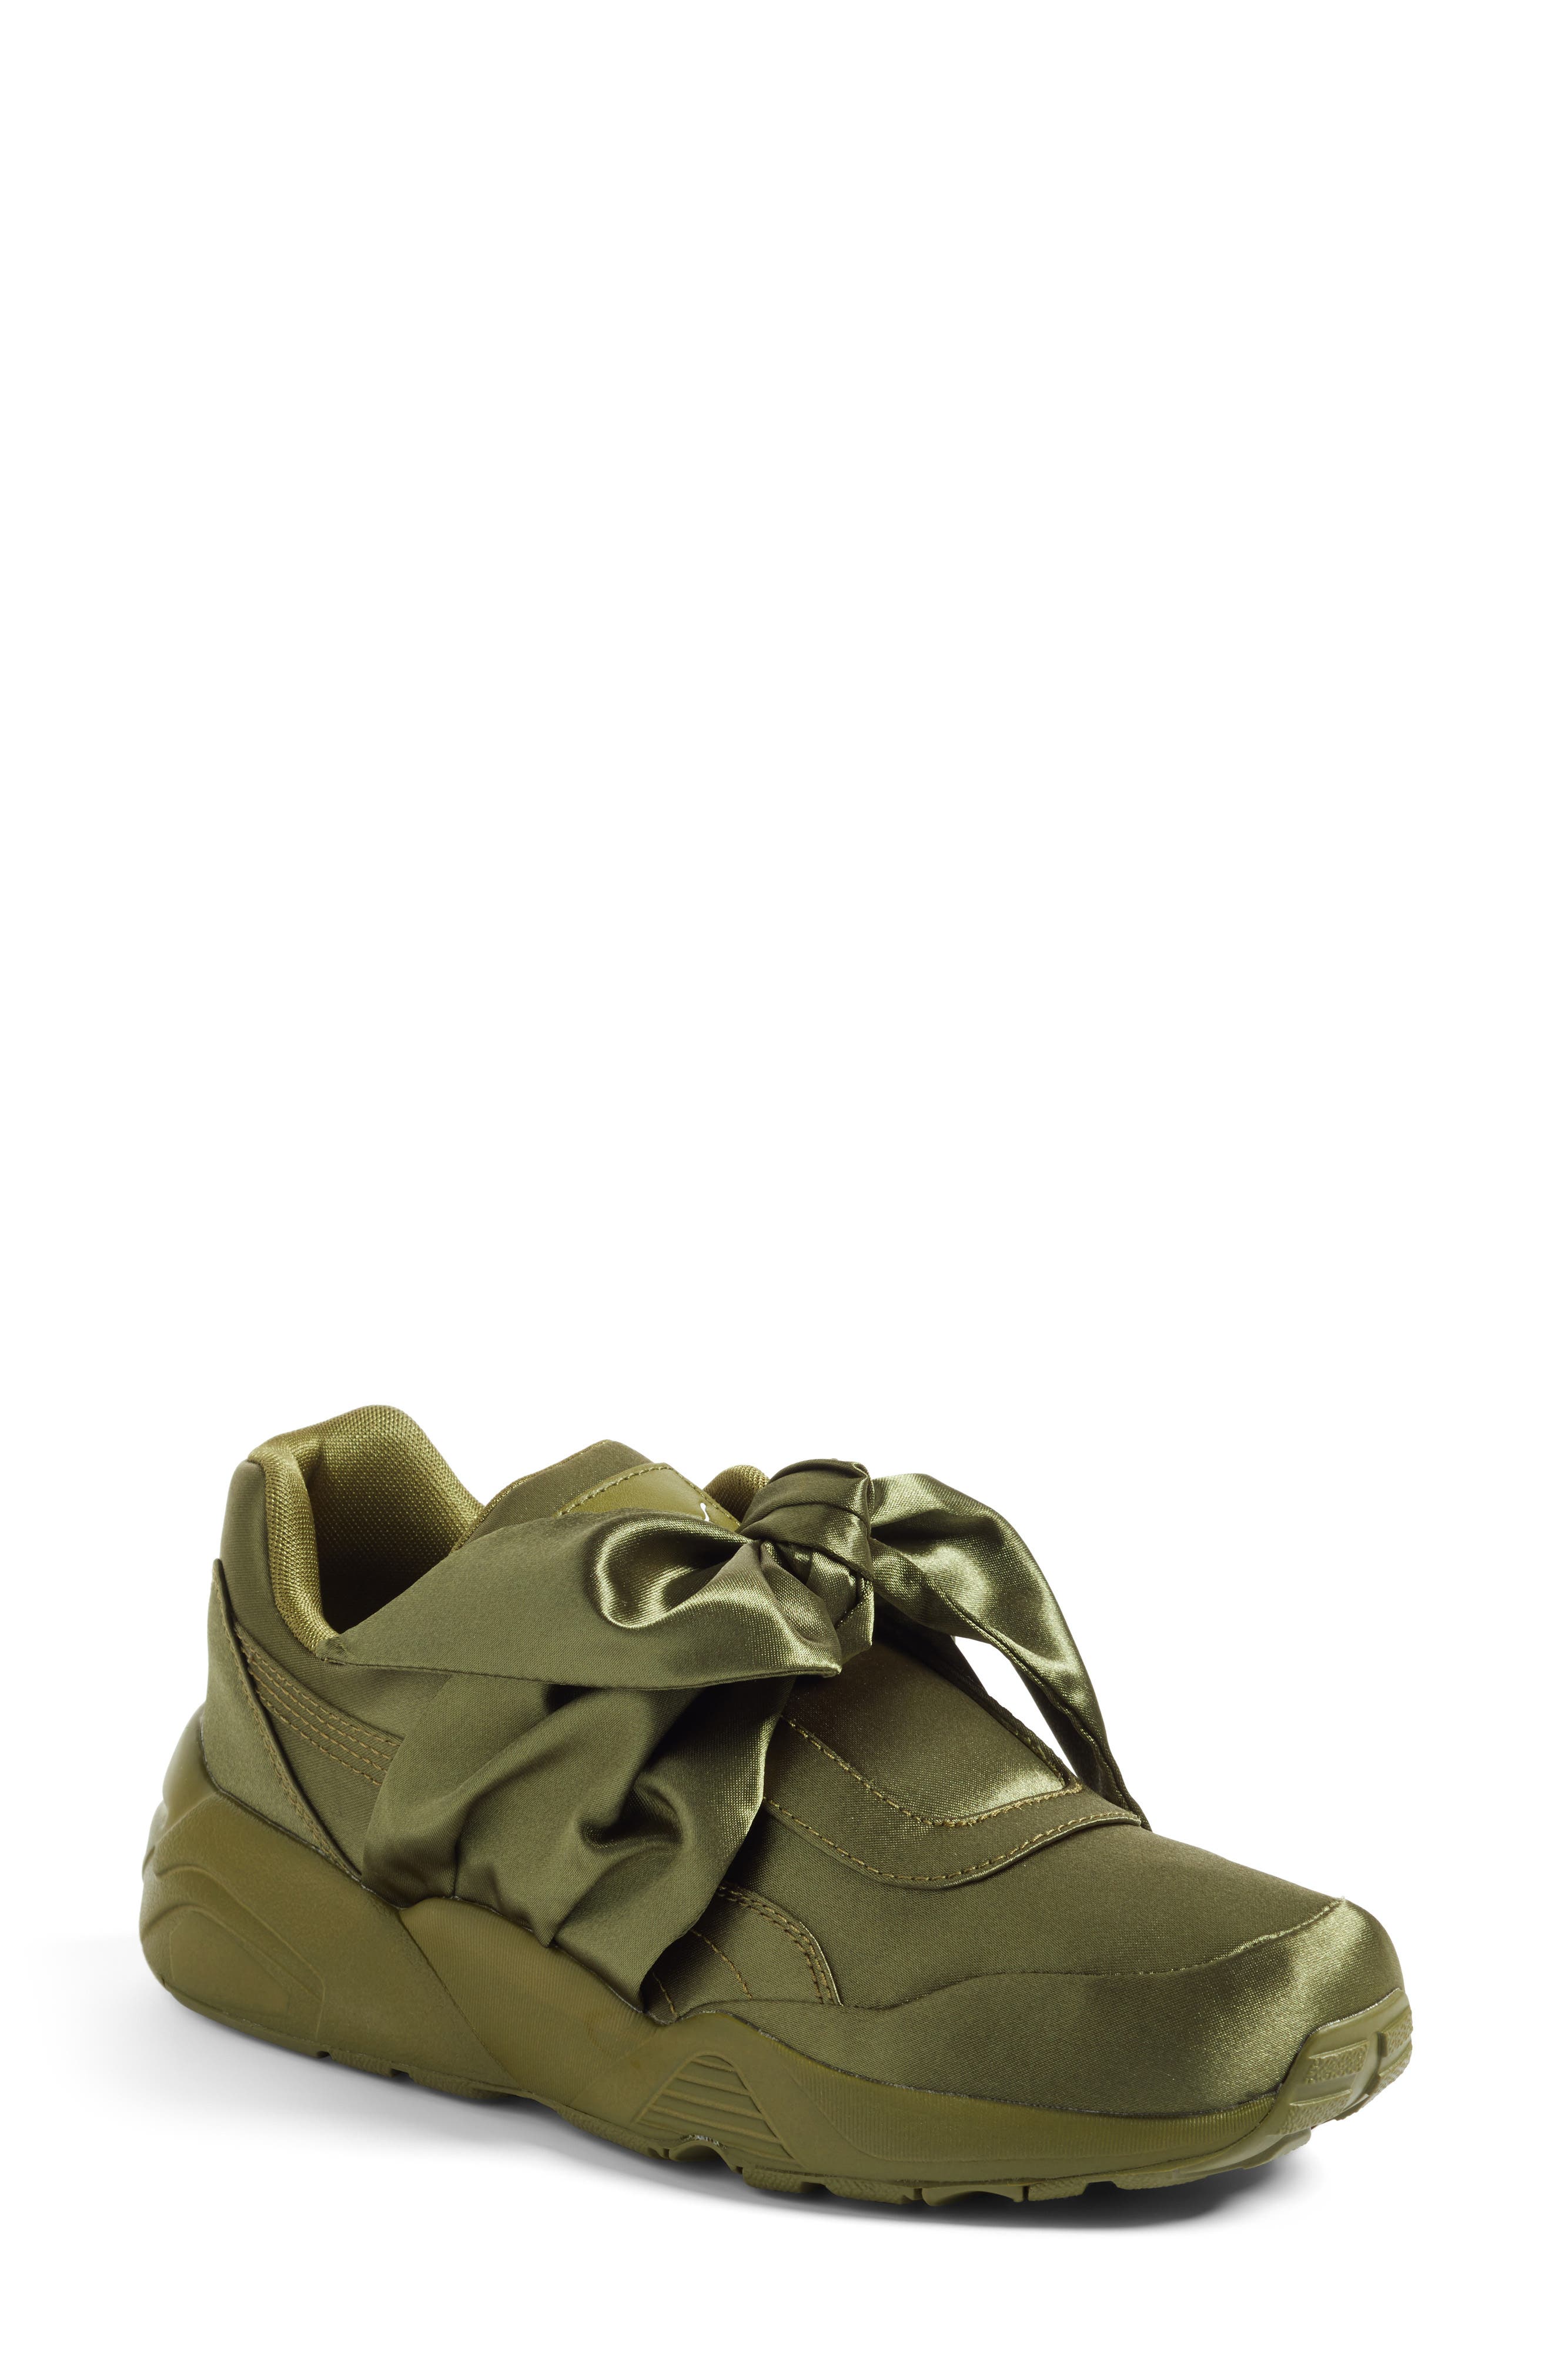 fenty puma by rihanna shoes price